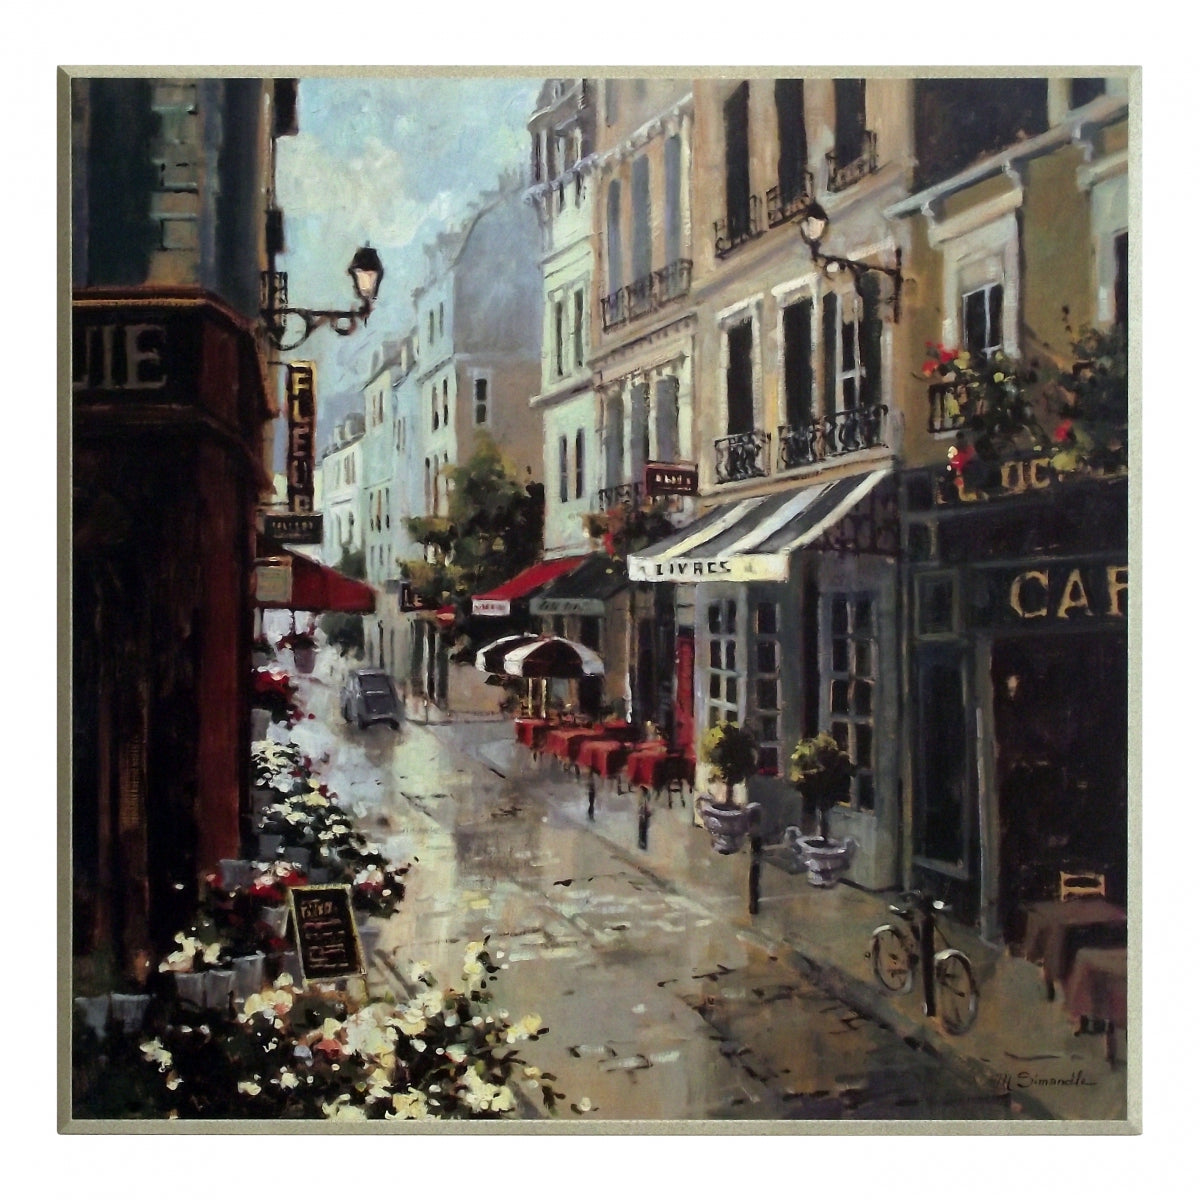 Obraz - Francuska ulica z knajpkami - reprodukcja na płycie A8790 51x51 cm - Obrazy Reprodukcje Ramy | ergopaul.pl